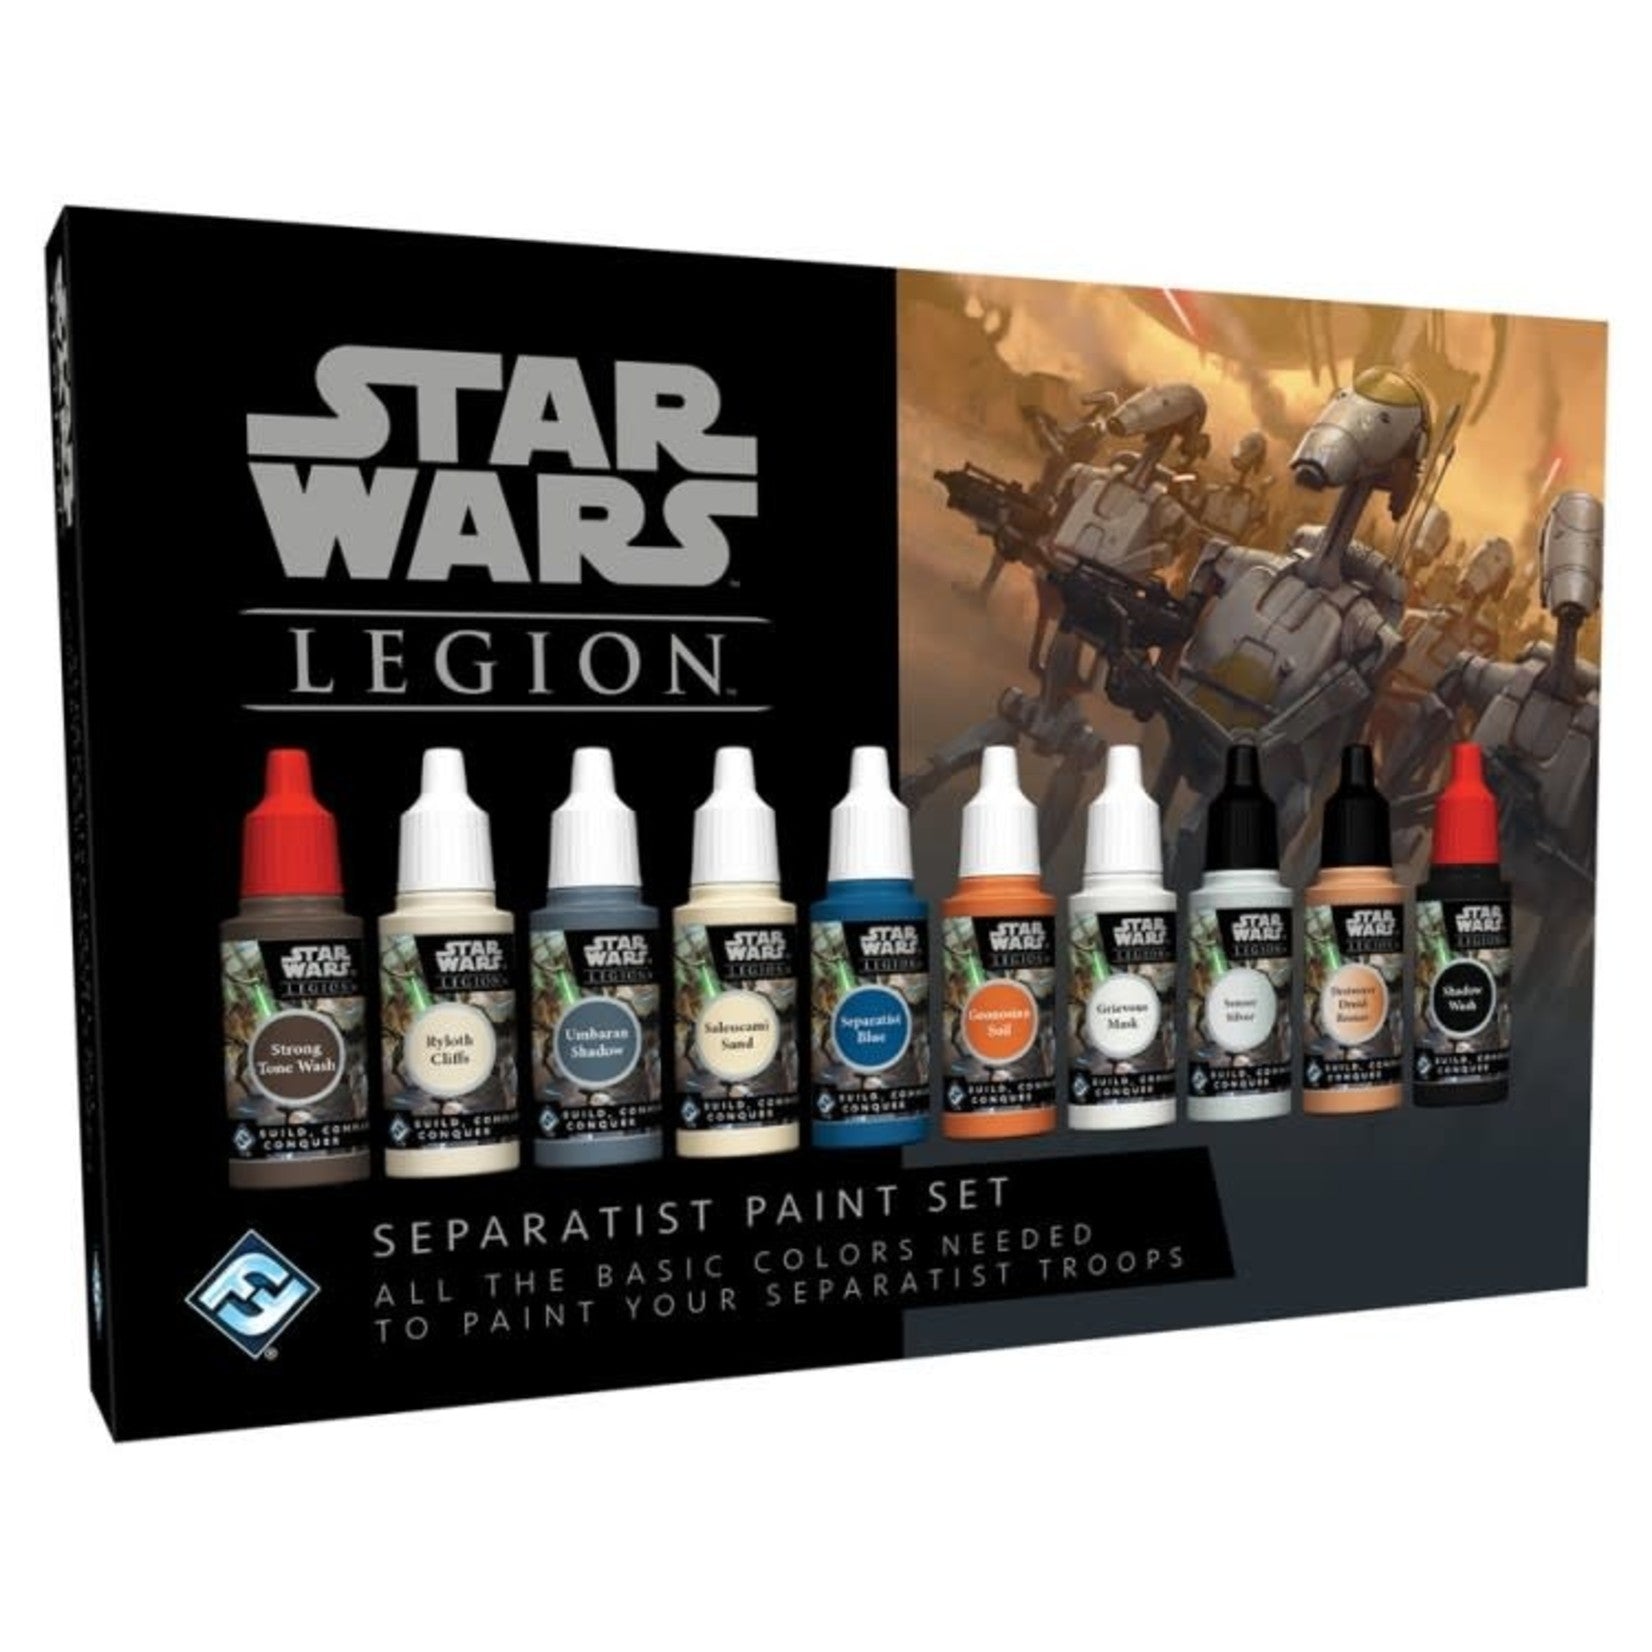 Star Wars: Legion - Separatist Paint Set